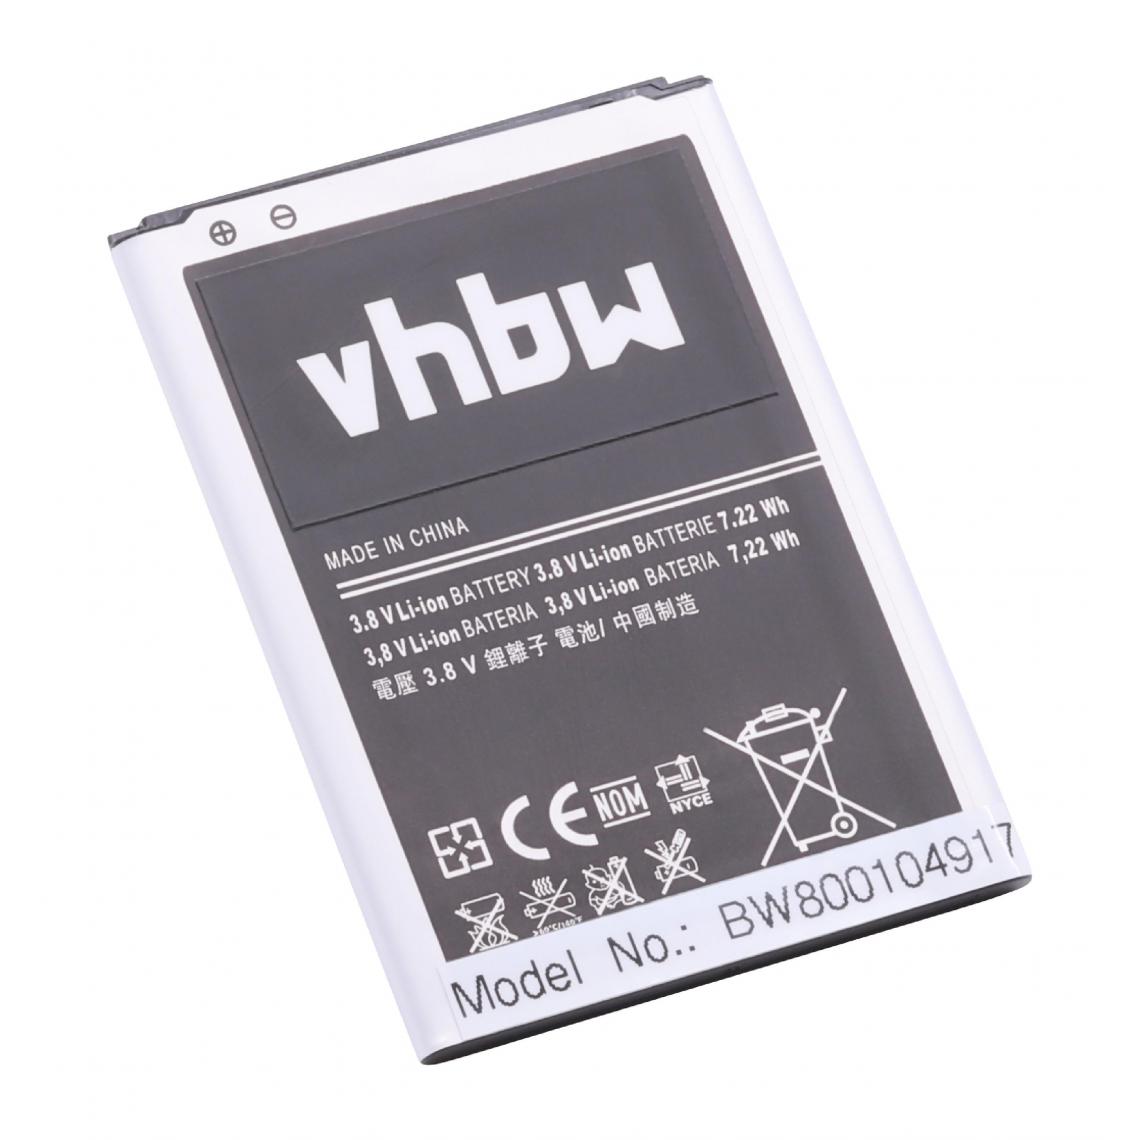 Vhbw - vhbw Batterie compatible avec Samsung Galaxy GT-i9198, S4 Mini smartphone (1900mAh, 3,7V, Li-ion) avec NFC - Batterie téléphone